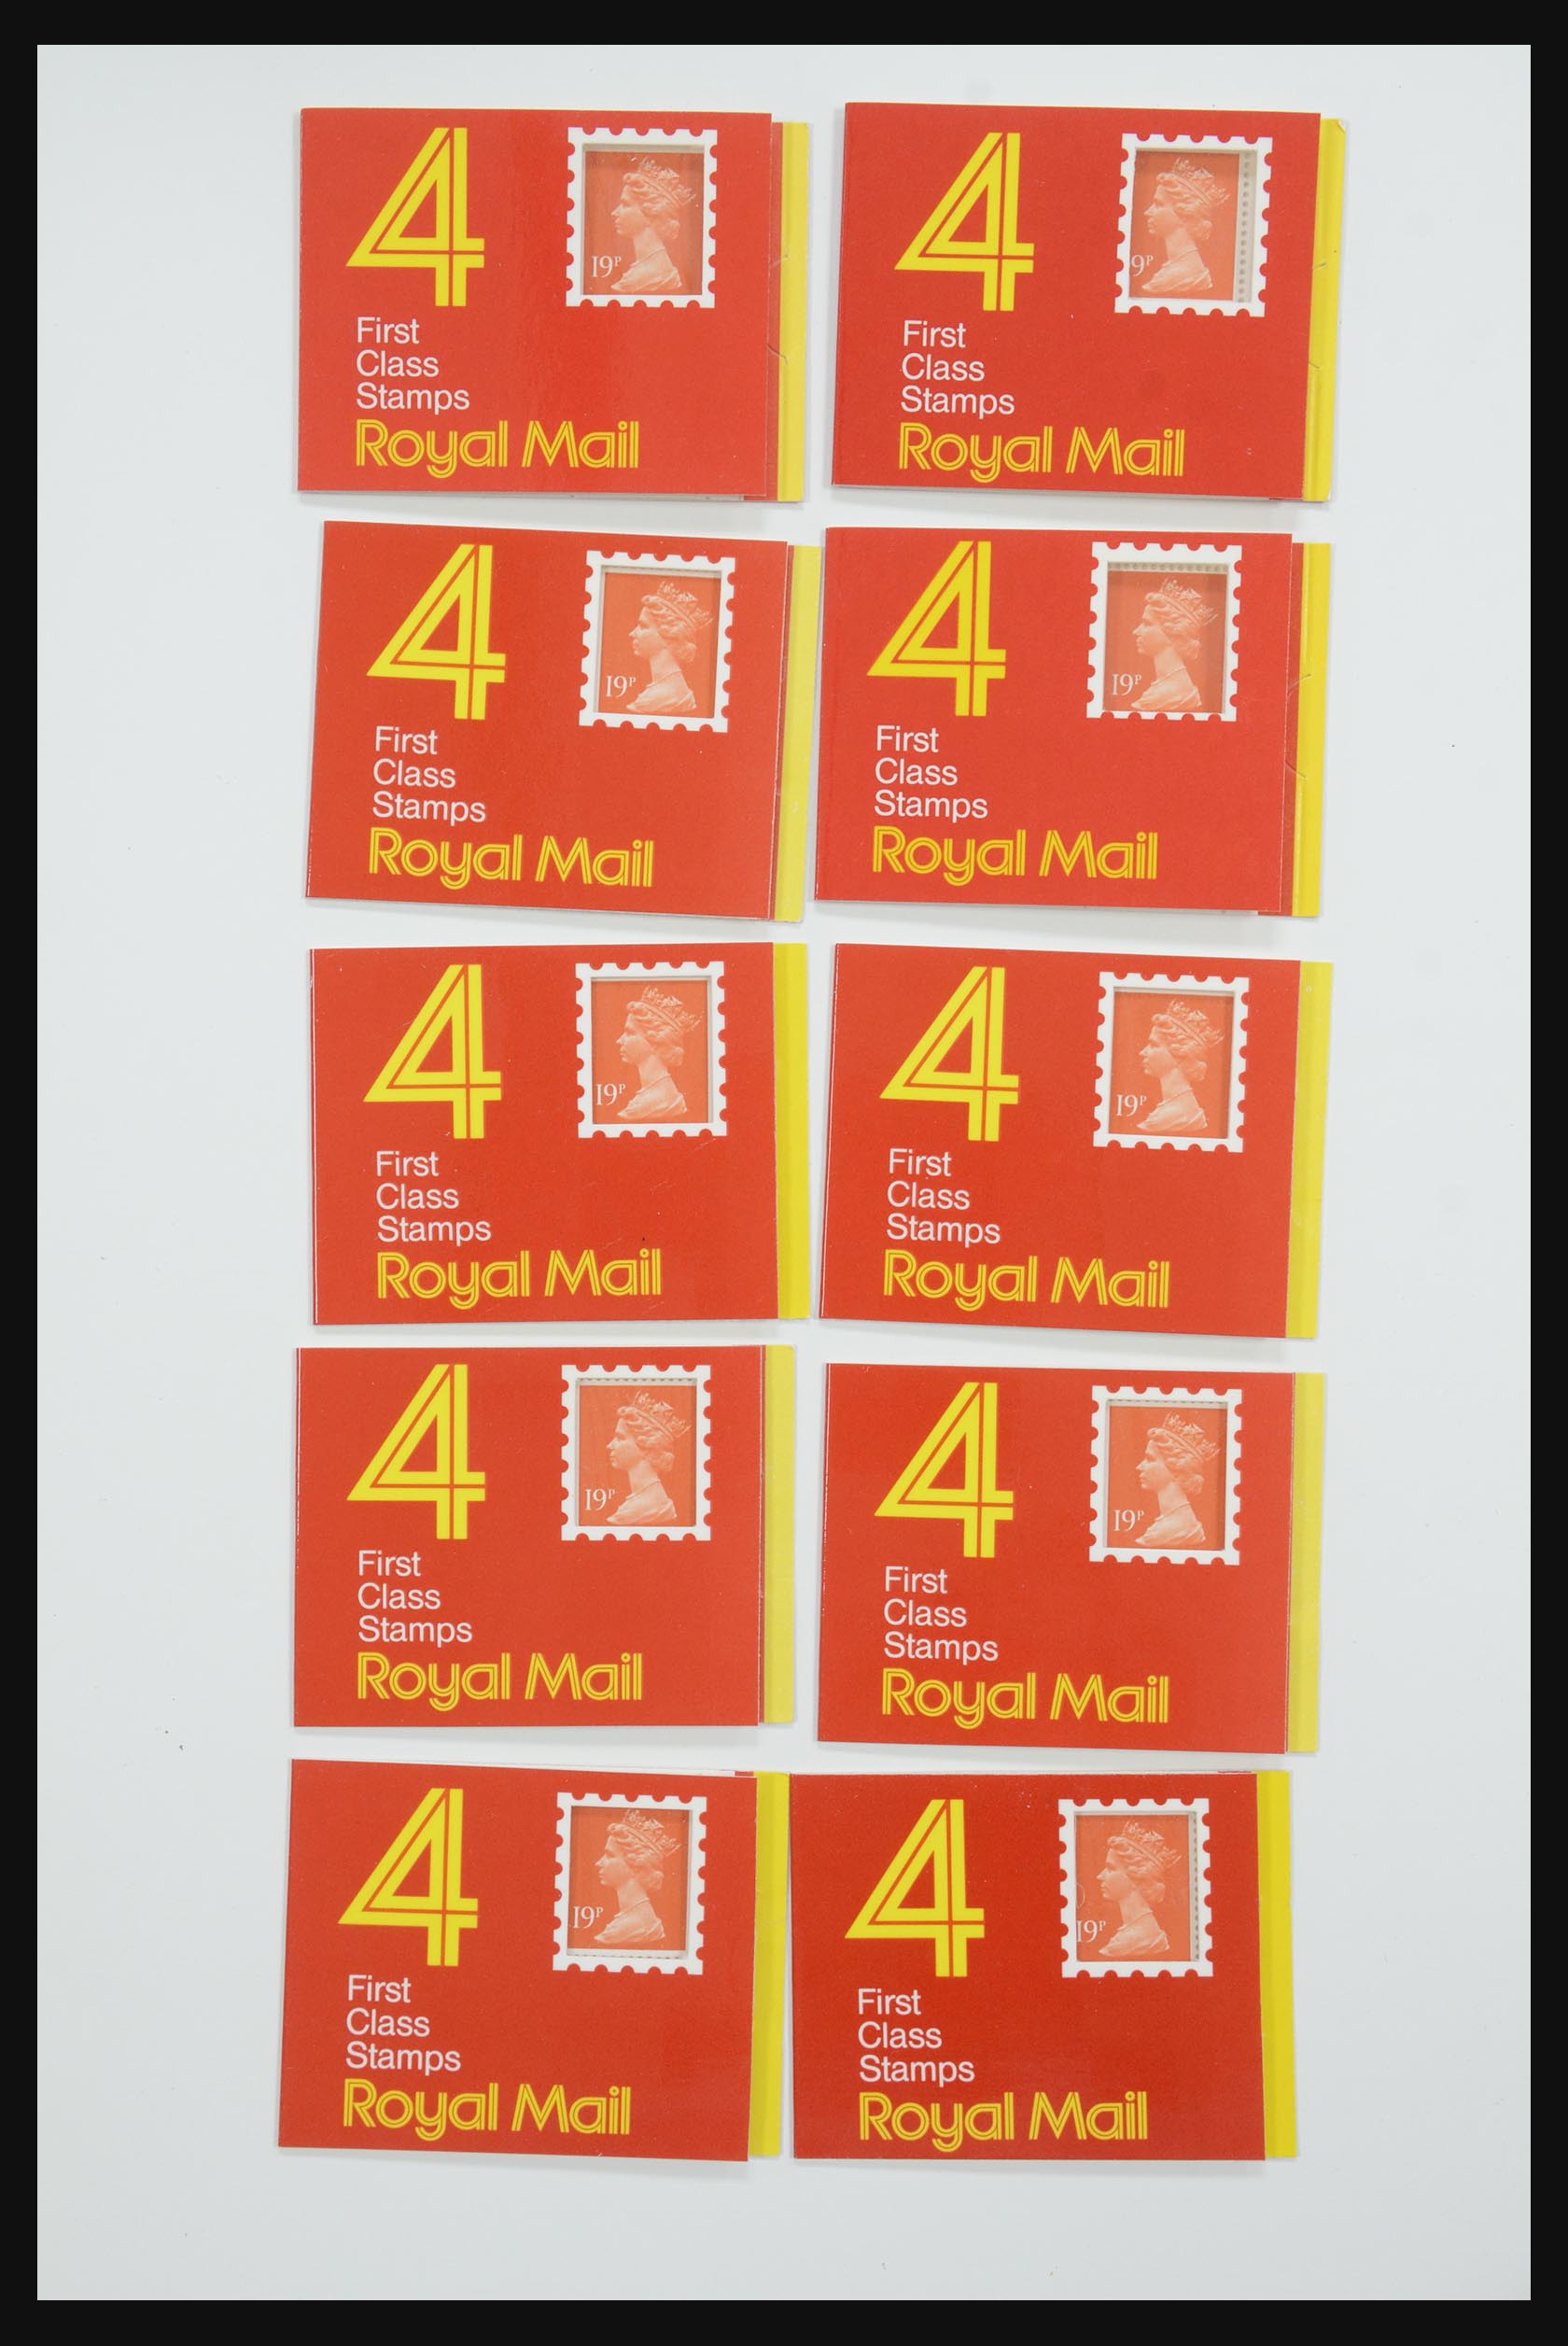 31961 065 - 31961 Great Britain stampbooklets 1971-1999.